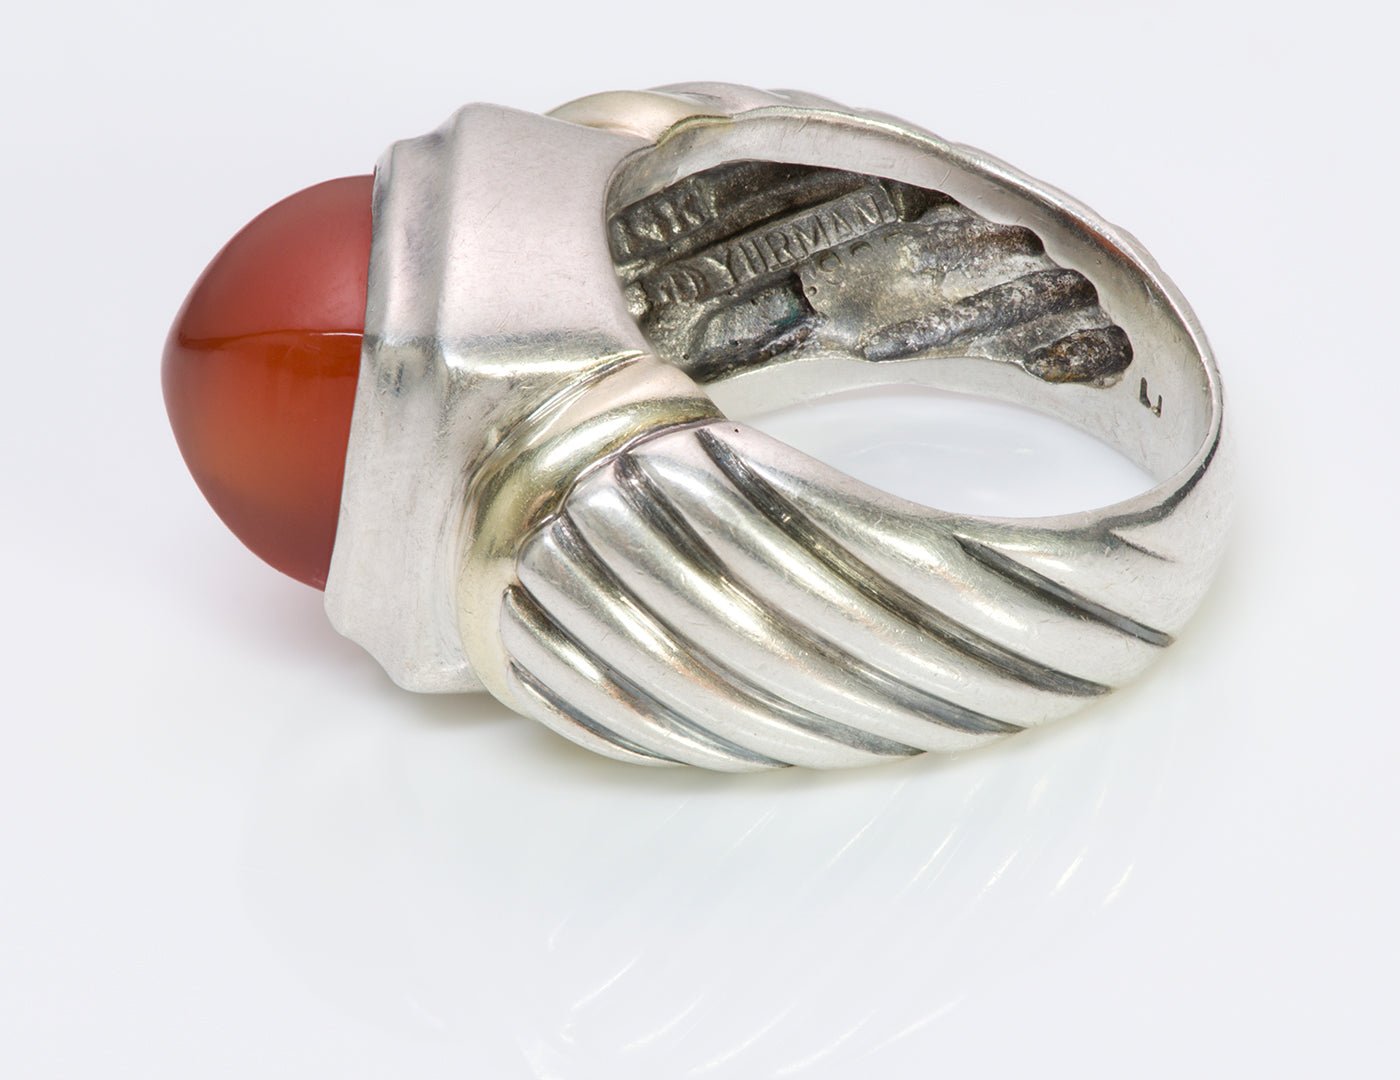 David Yurman Sugarloaf Carnelian Silver Gold Ring - DSF Antique Jewelry